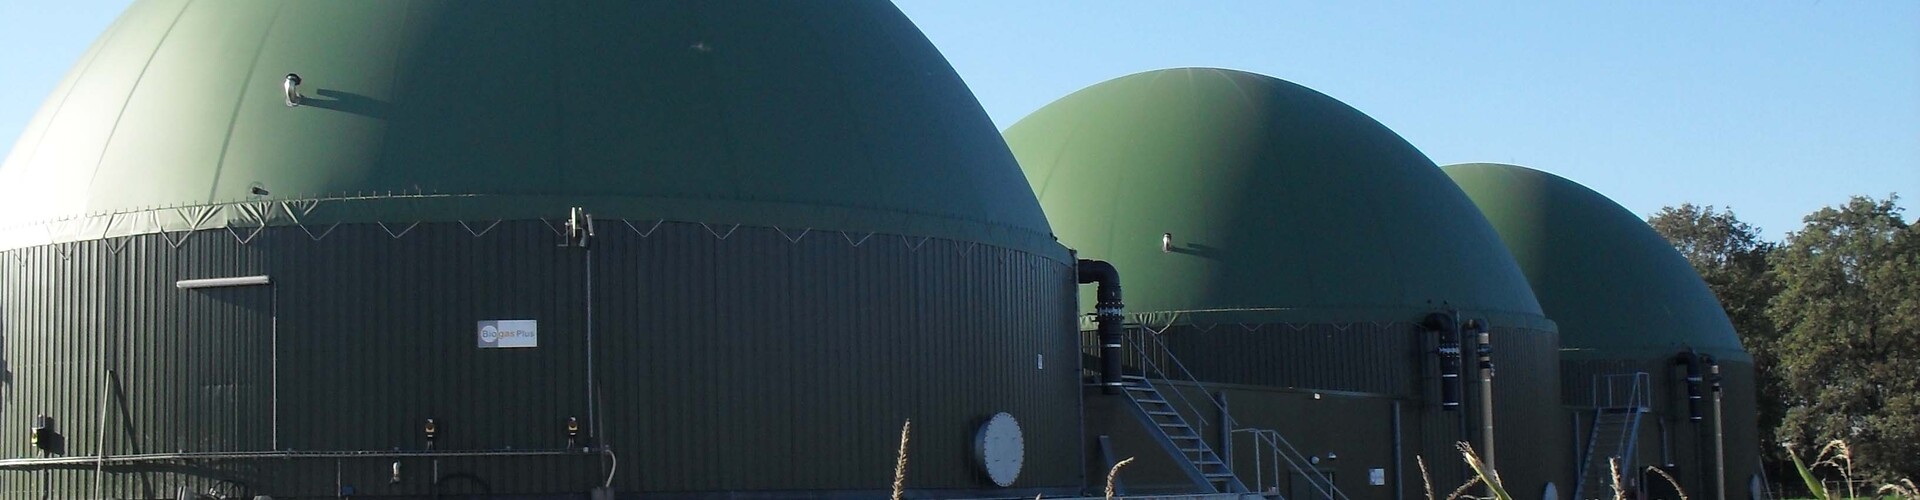 Installation de biogaz Lierop, Pays-Bas